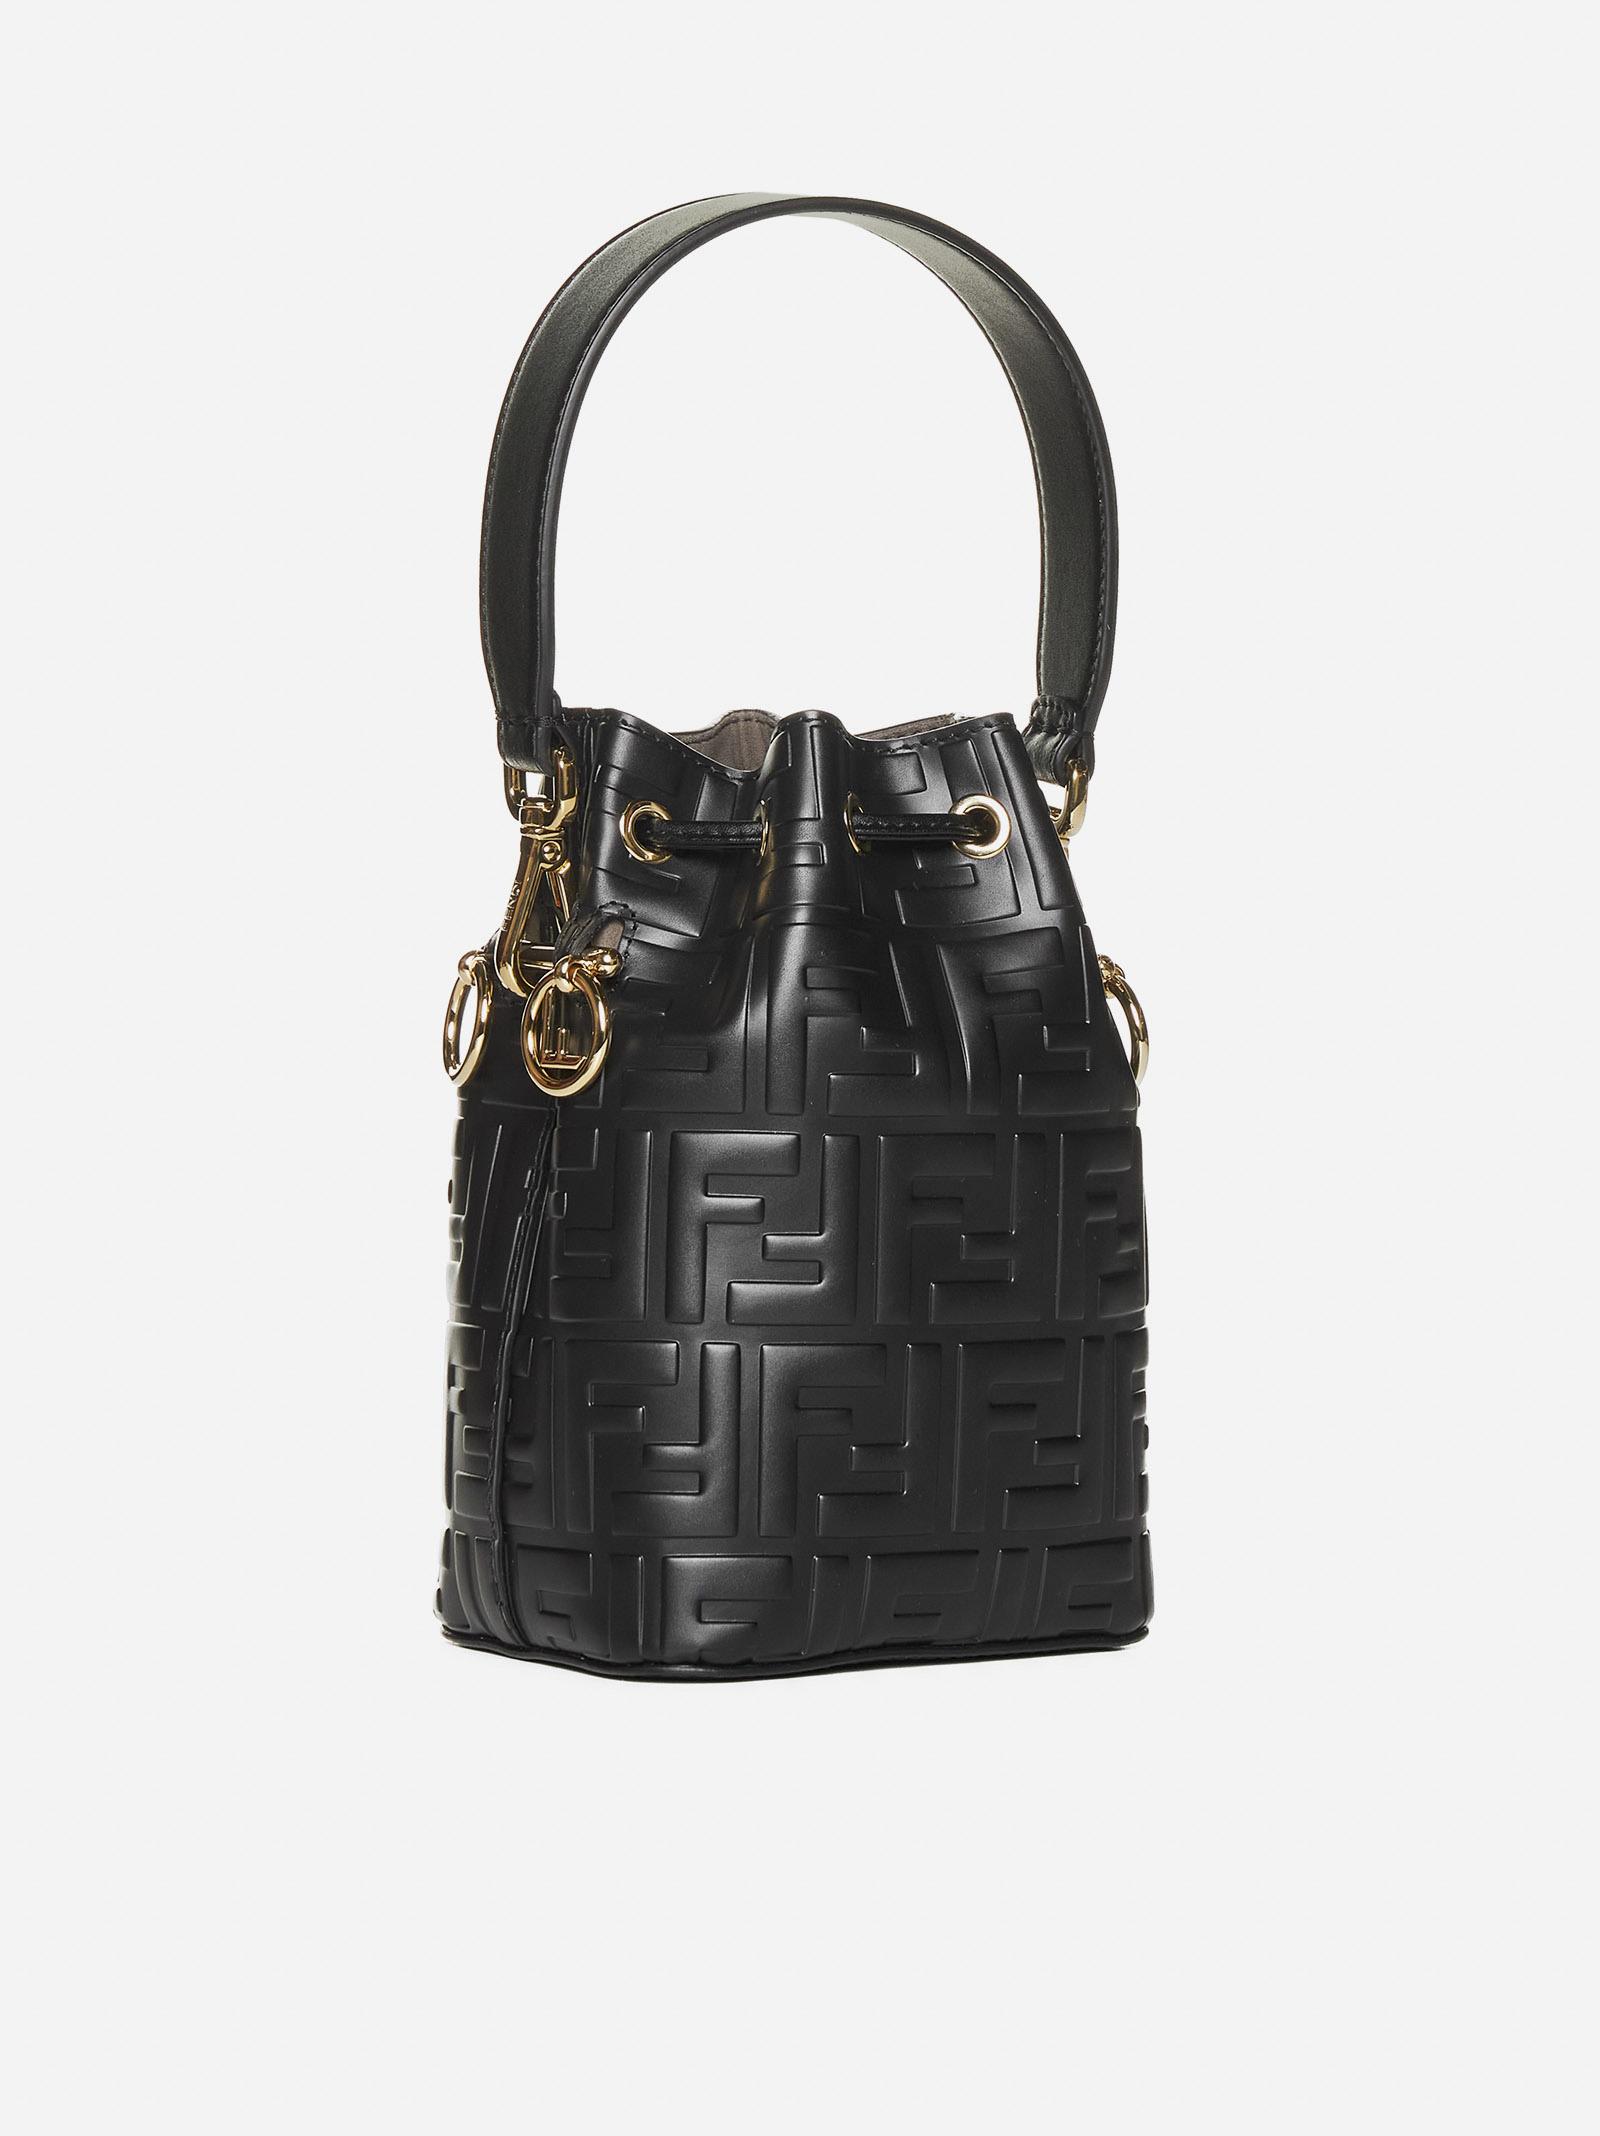 Fendi Mini Mon Tresor Ff Leather Bag in Black